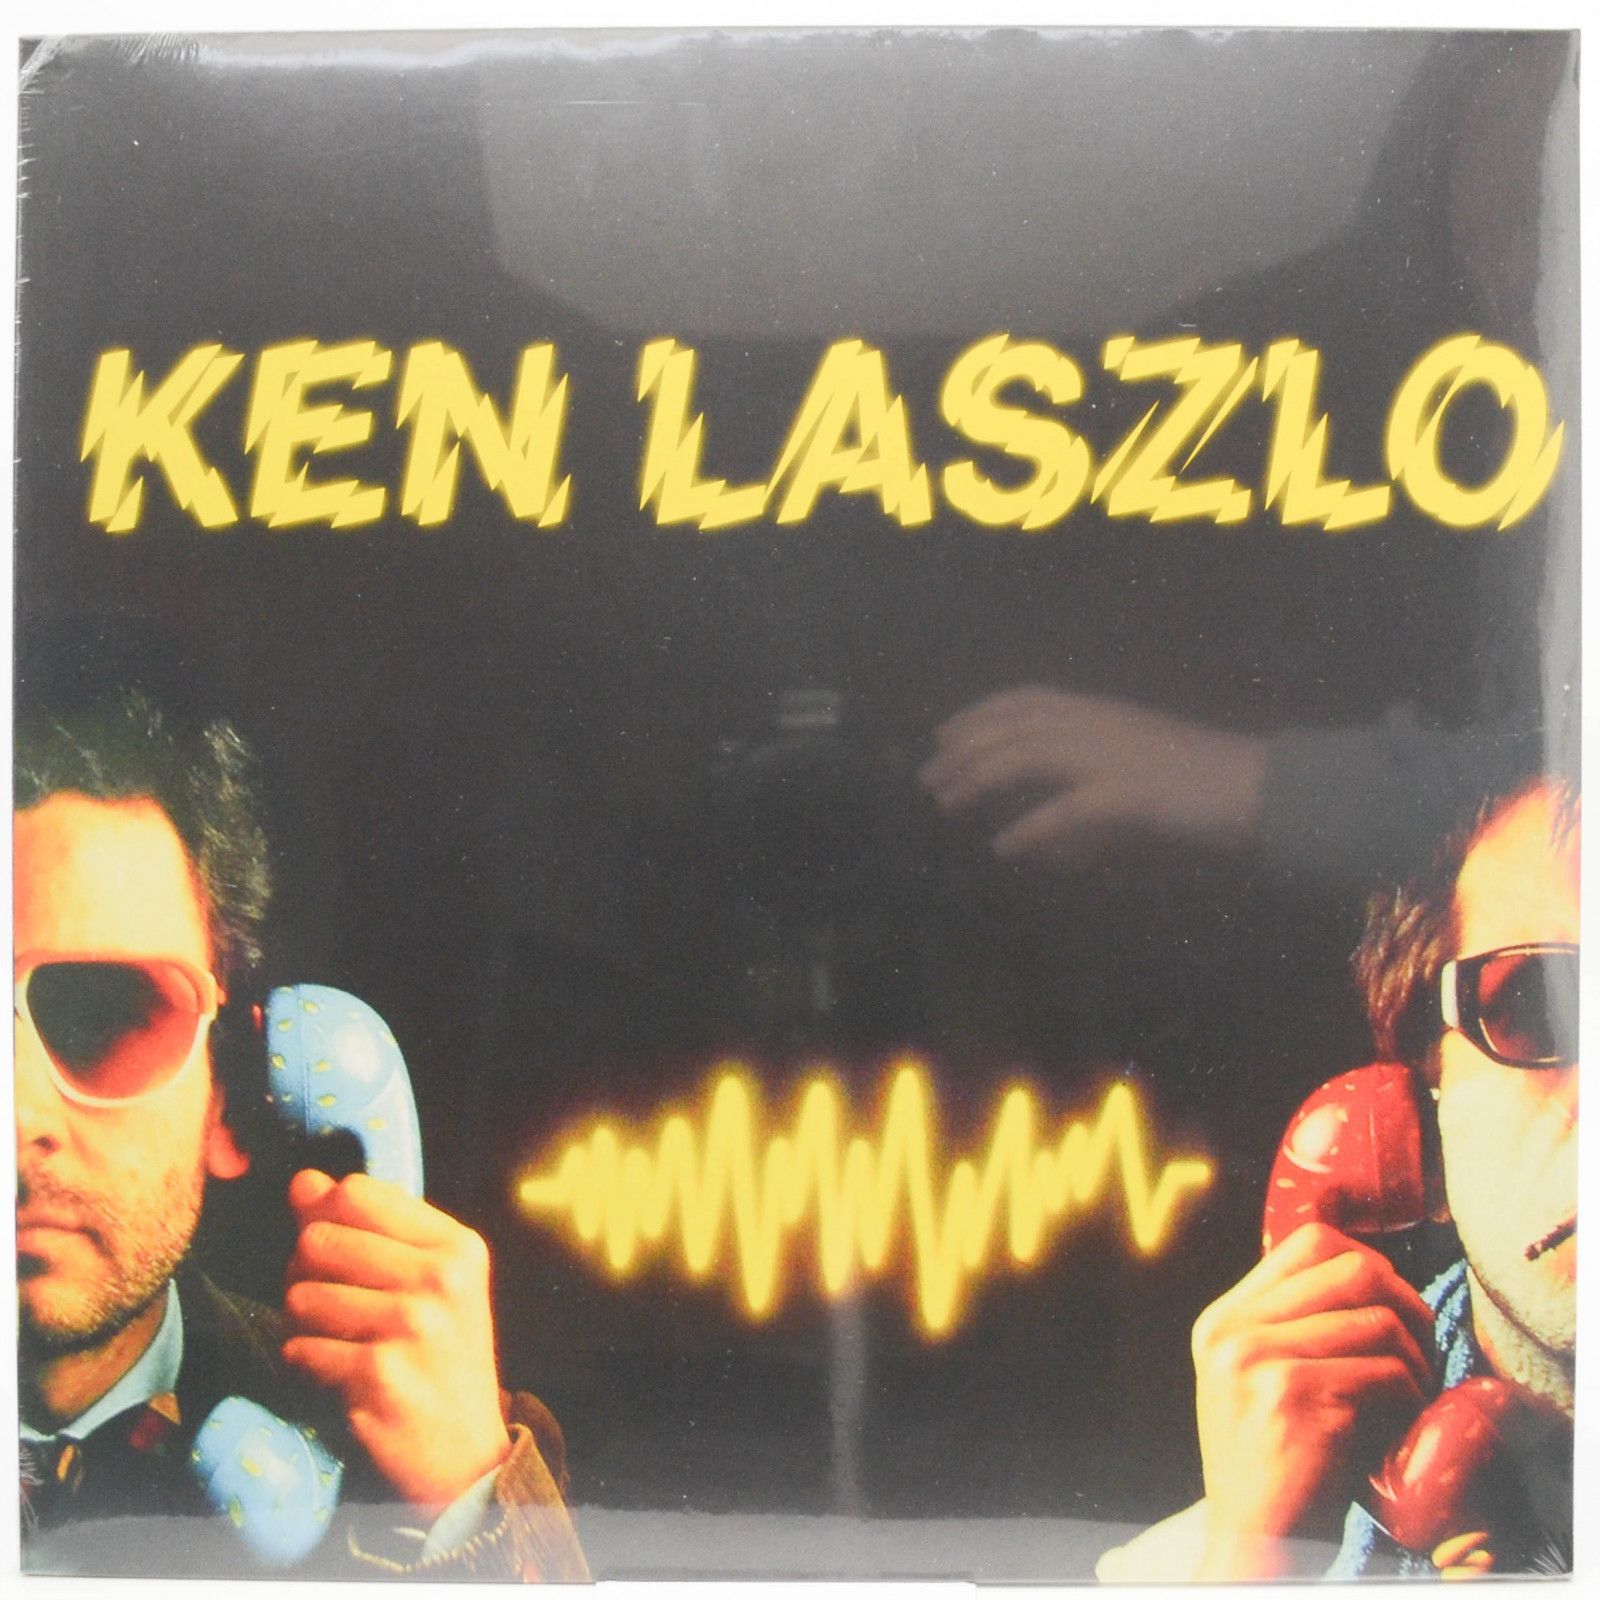 Ken Laszlo — Ken Laszlo, 1987